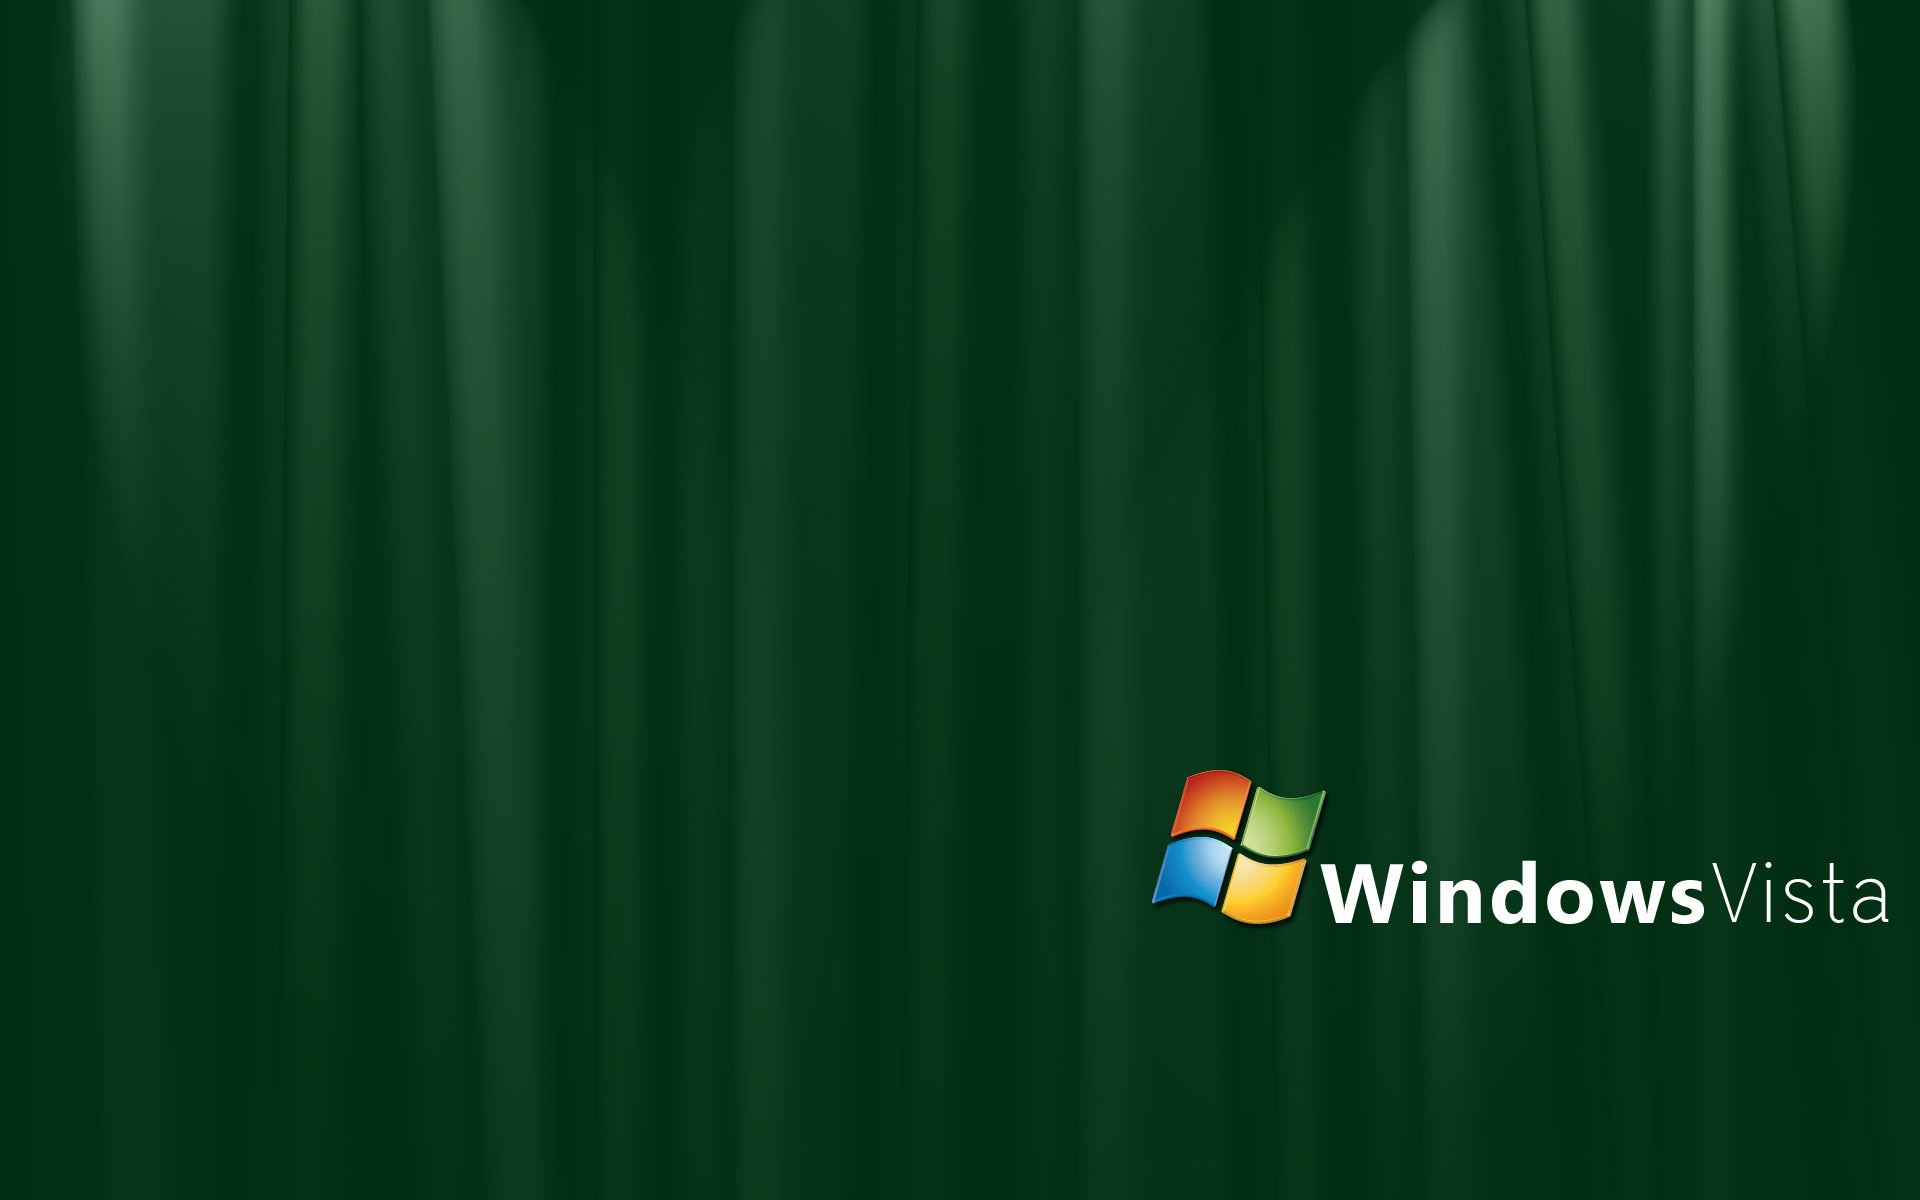 Windows Vista Wallpaper For Desktop